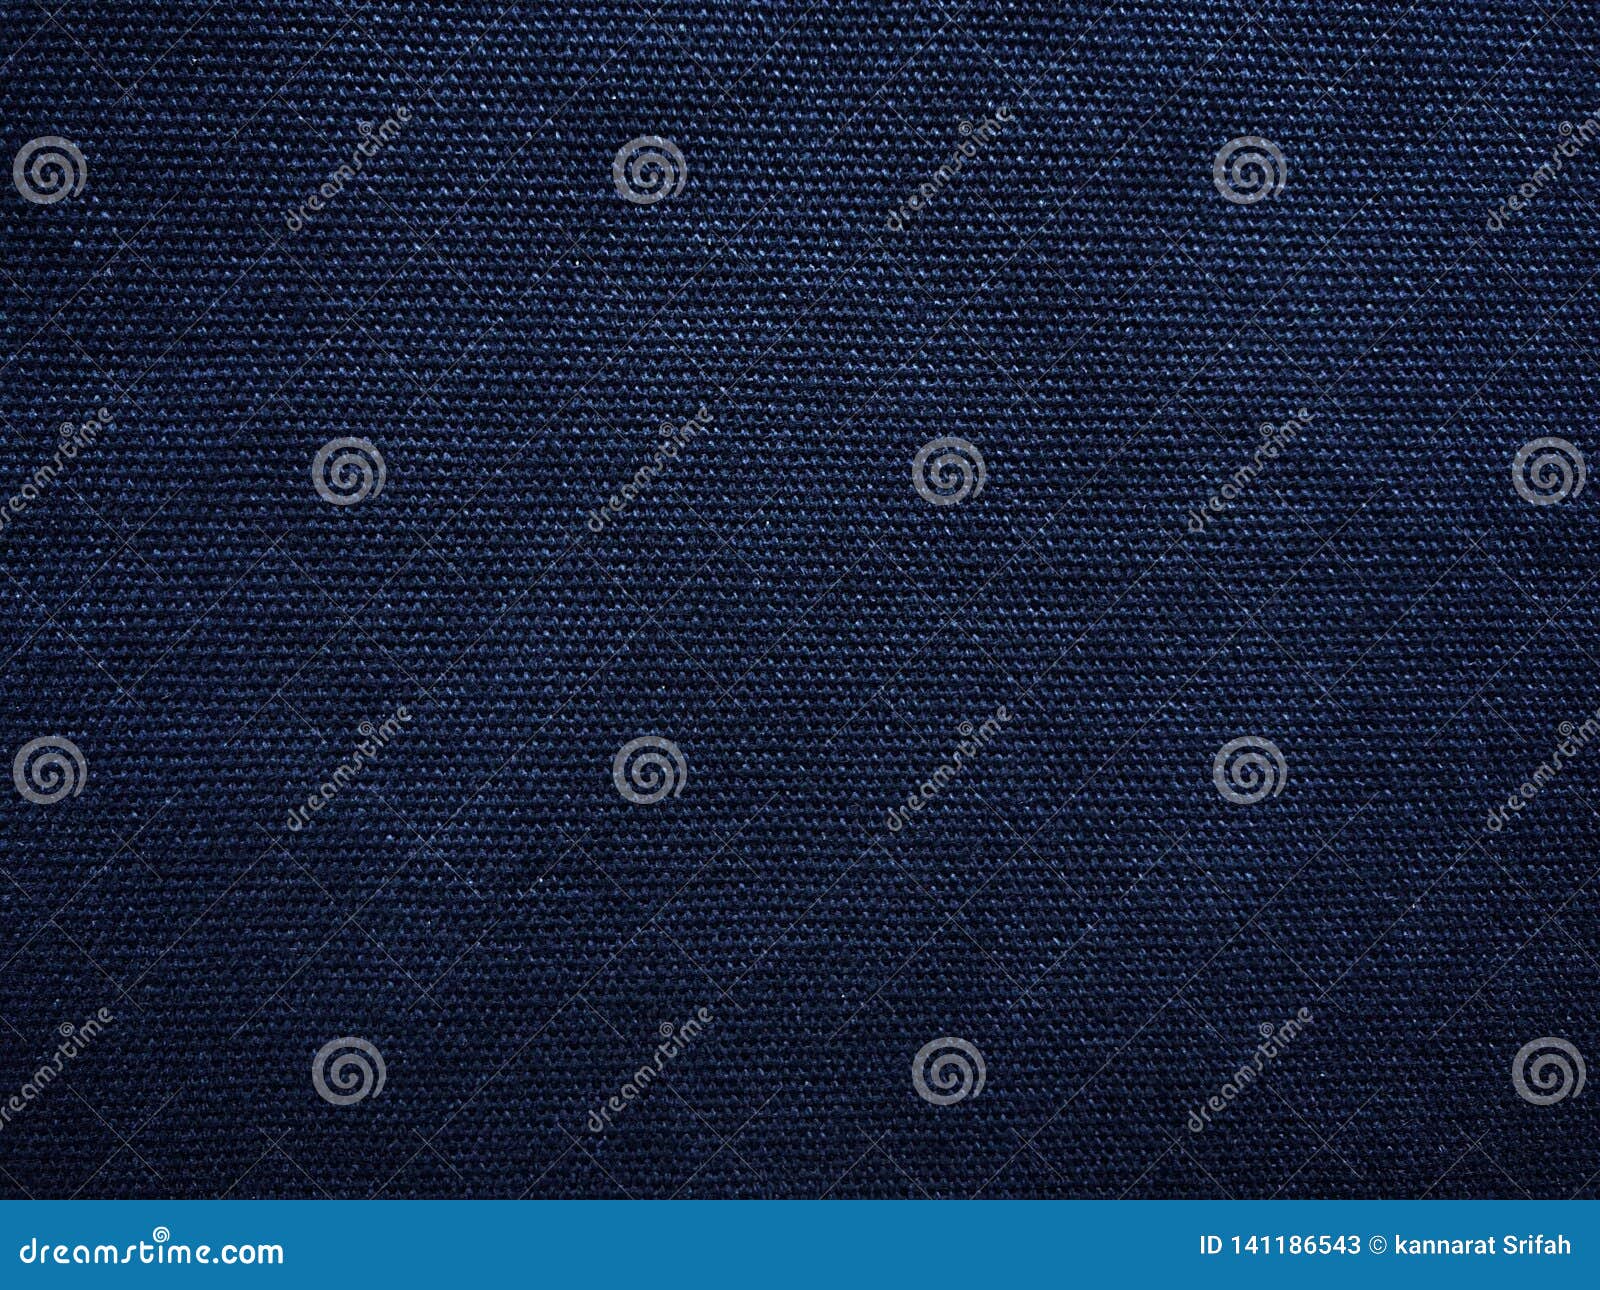 navy blue canvas fabric